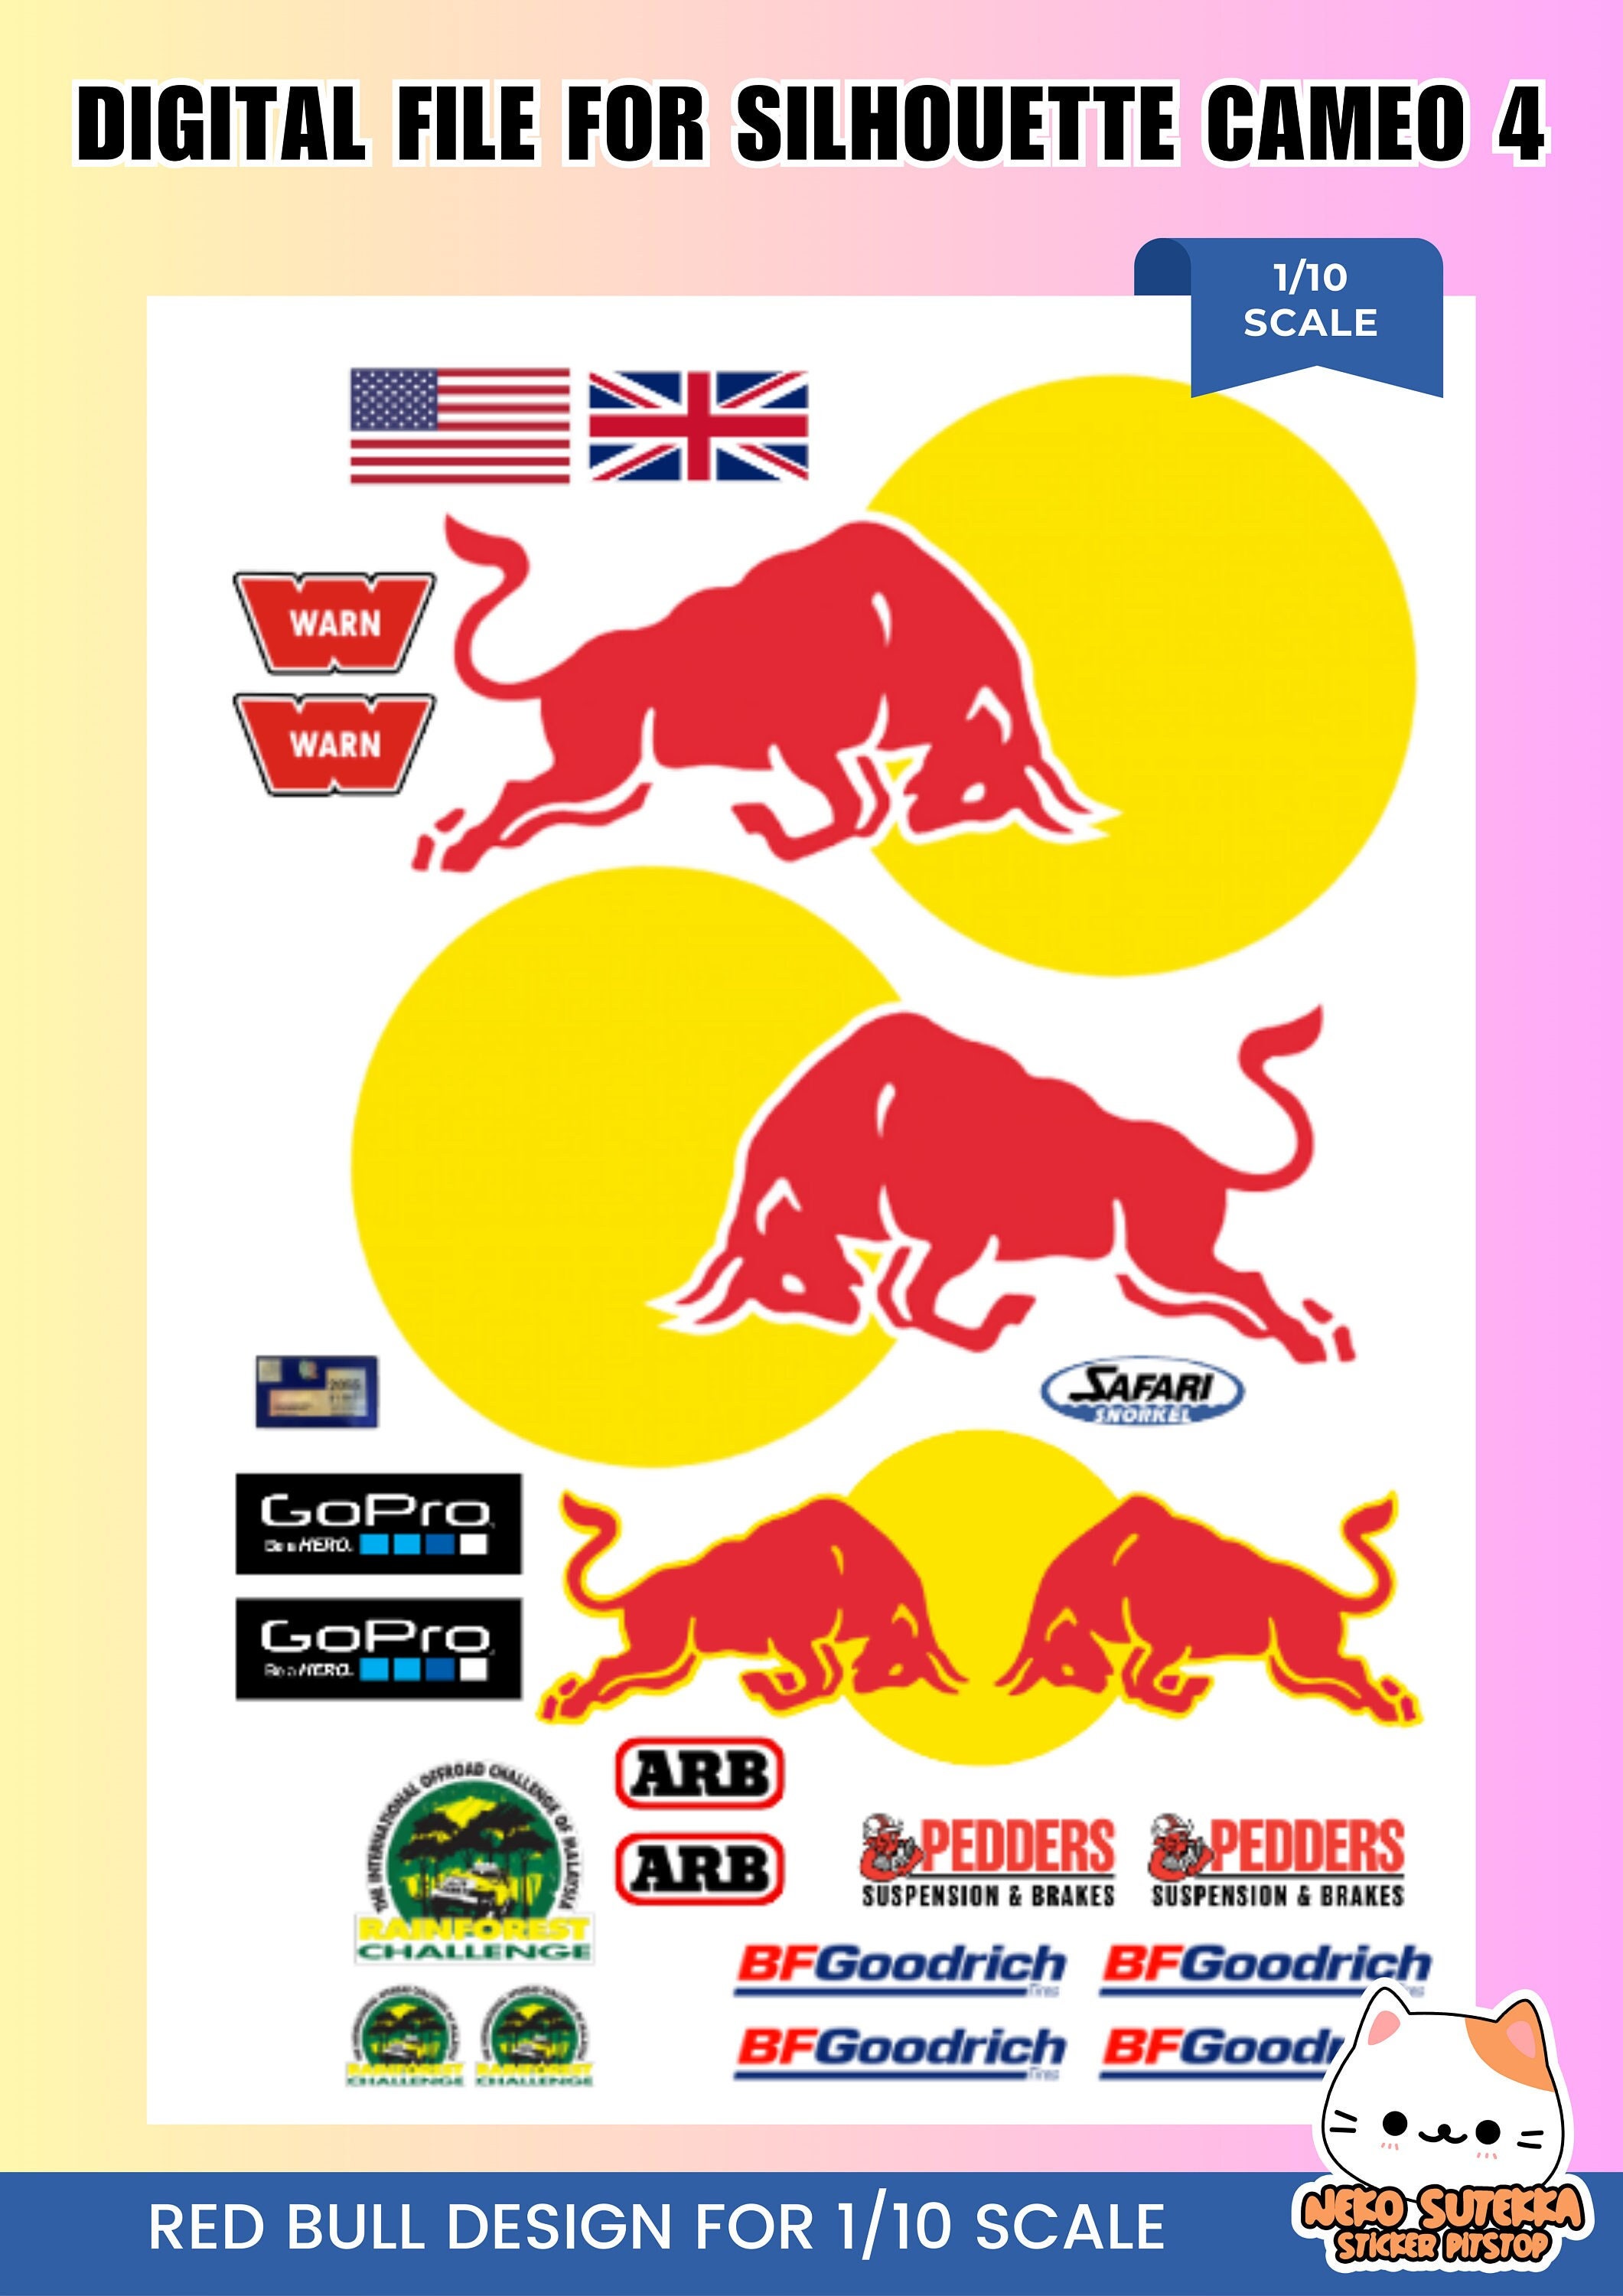 Red Bull Stickers Decals Sheet - 23PC 12x9 - MX ATV Dirt Bike -  REFLECTIVE